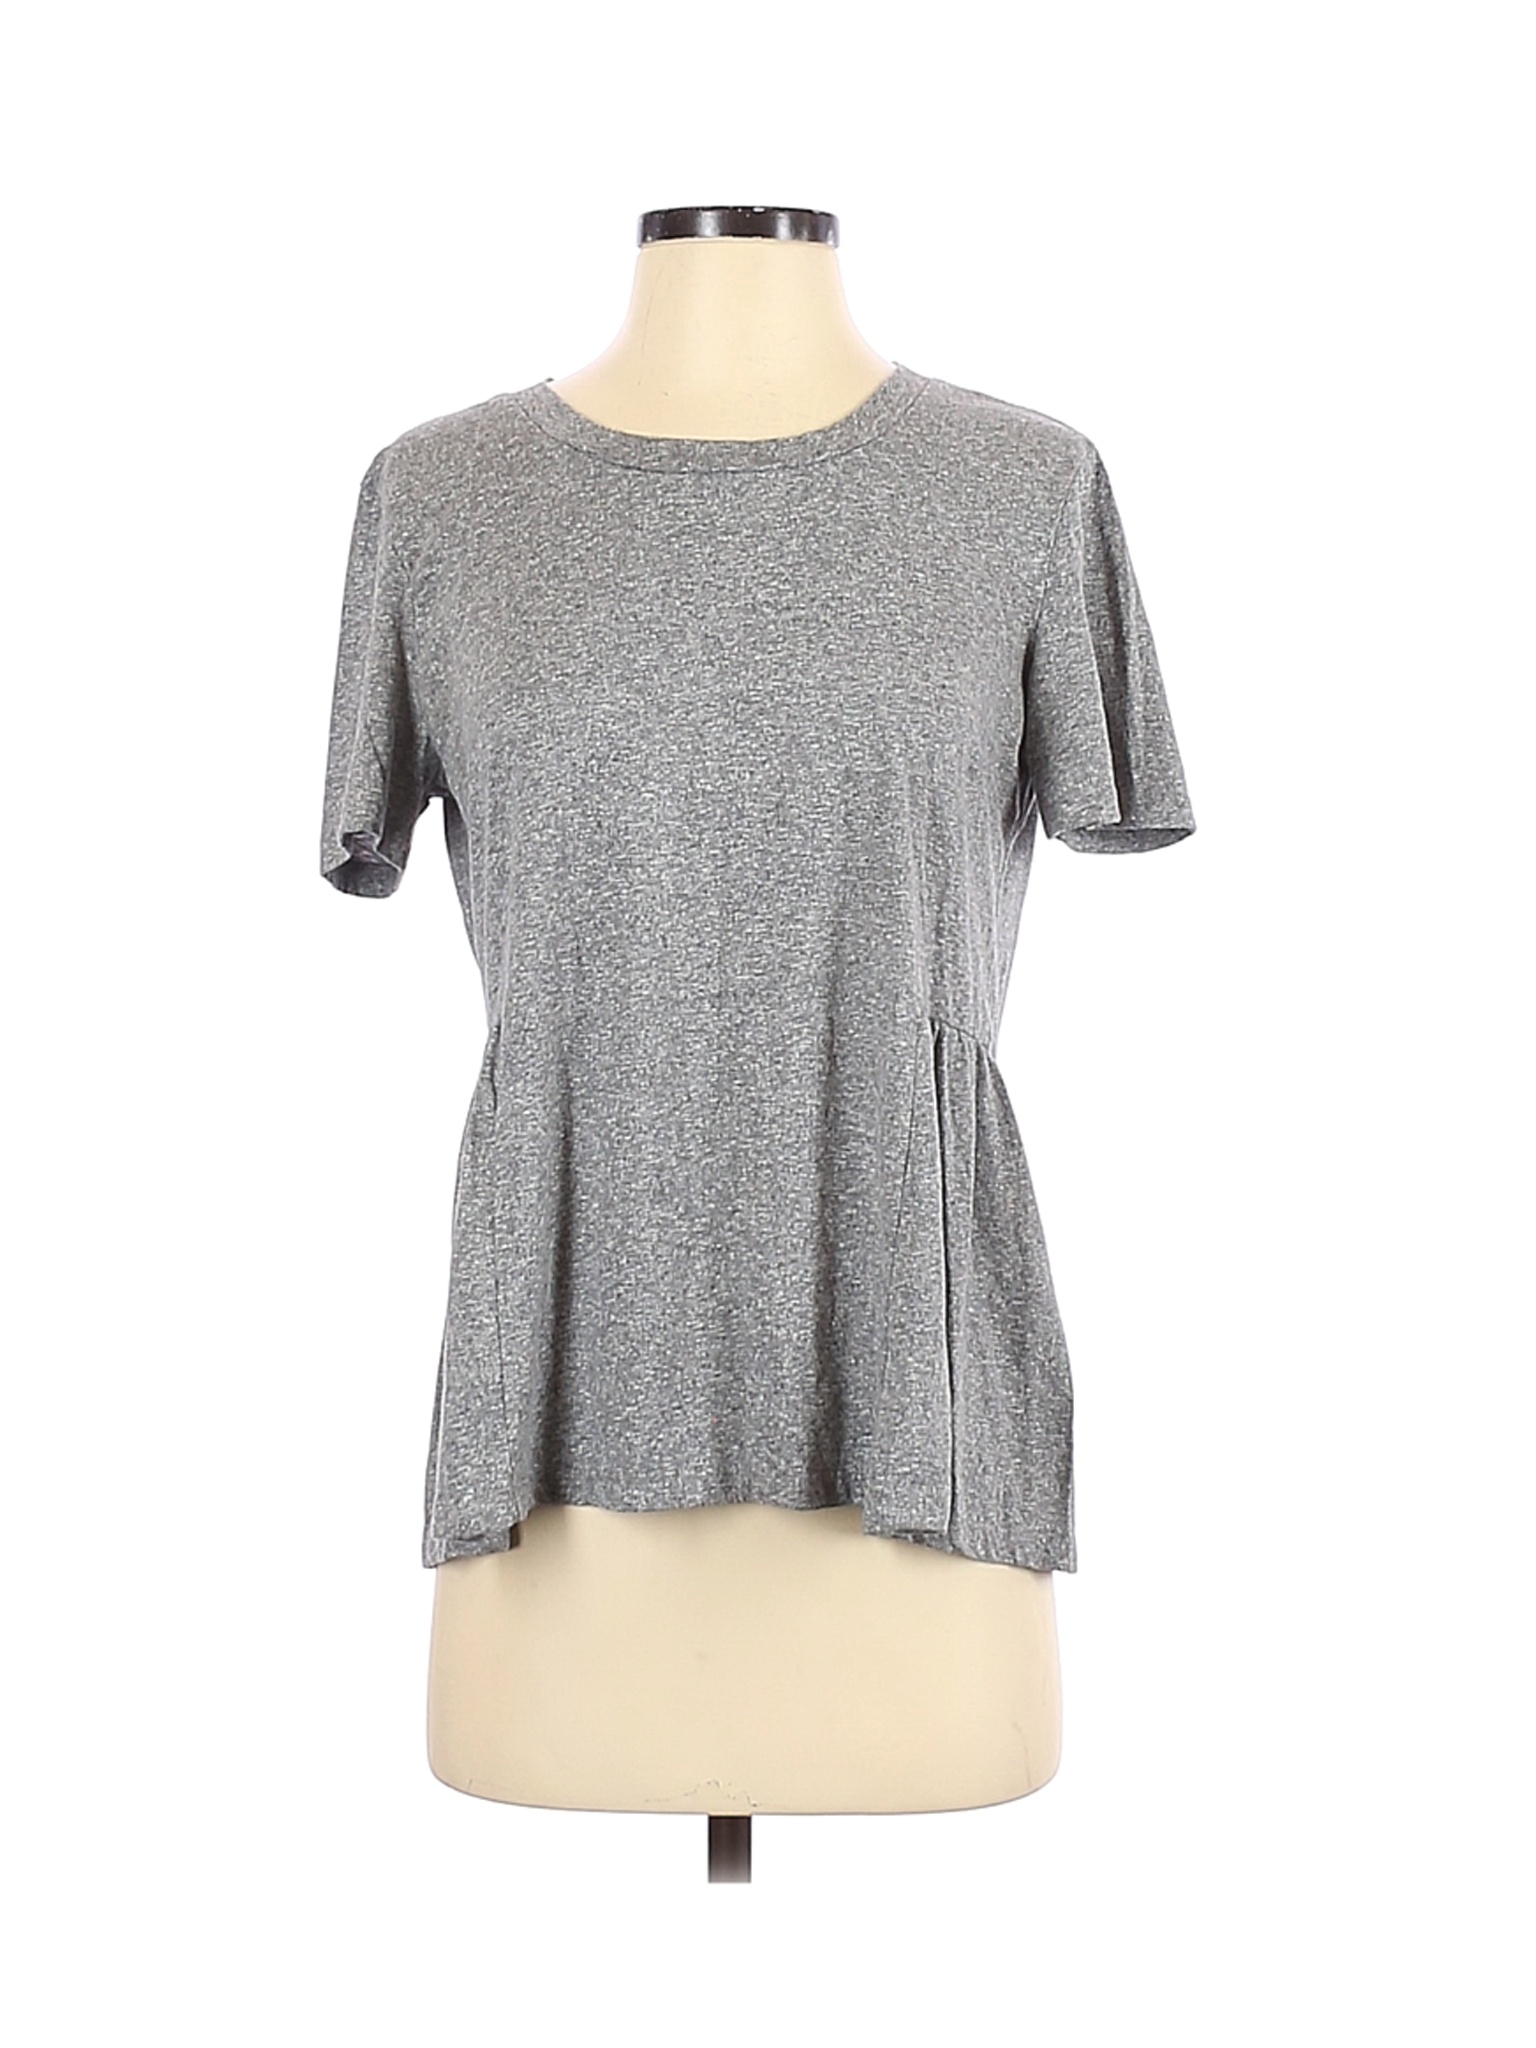 Philosophy Republic Clothing Women Gray Short Sleeve Top S | eBay